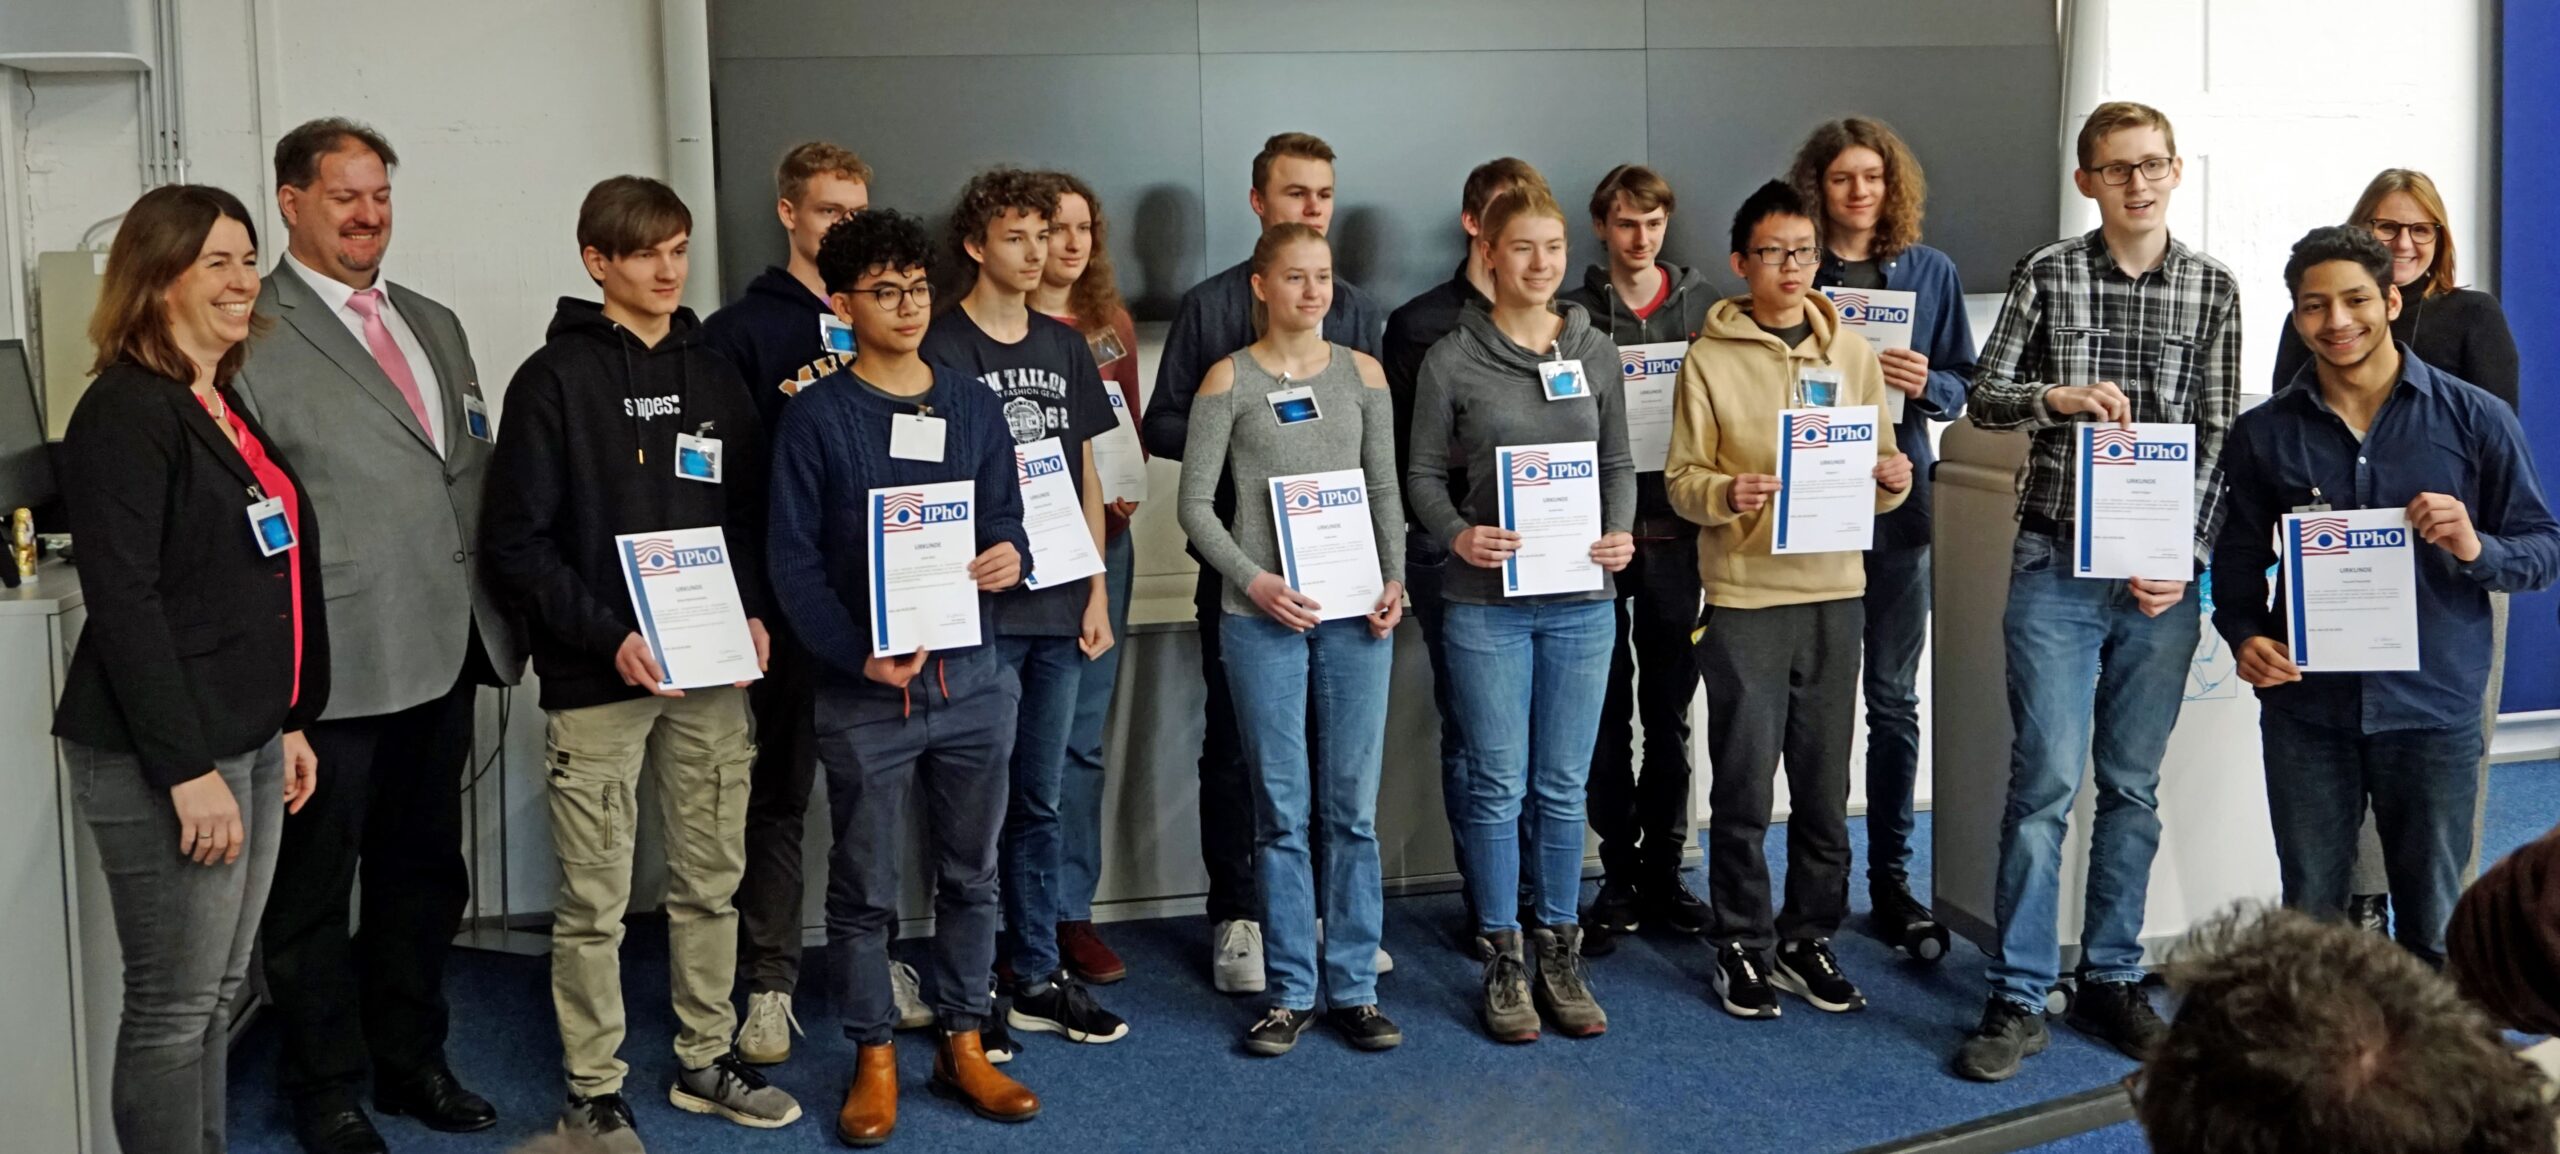 Physik-Olympiade: Ehrung der besten 20 Schüler*innen aus NRW